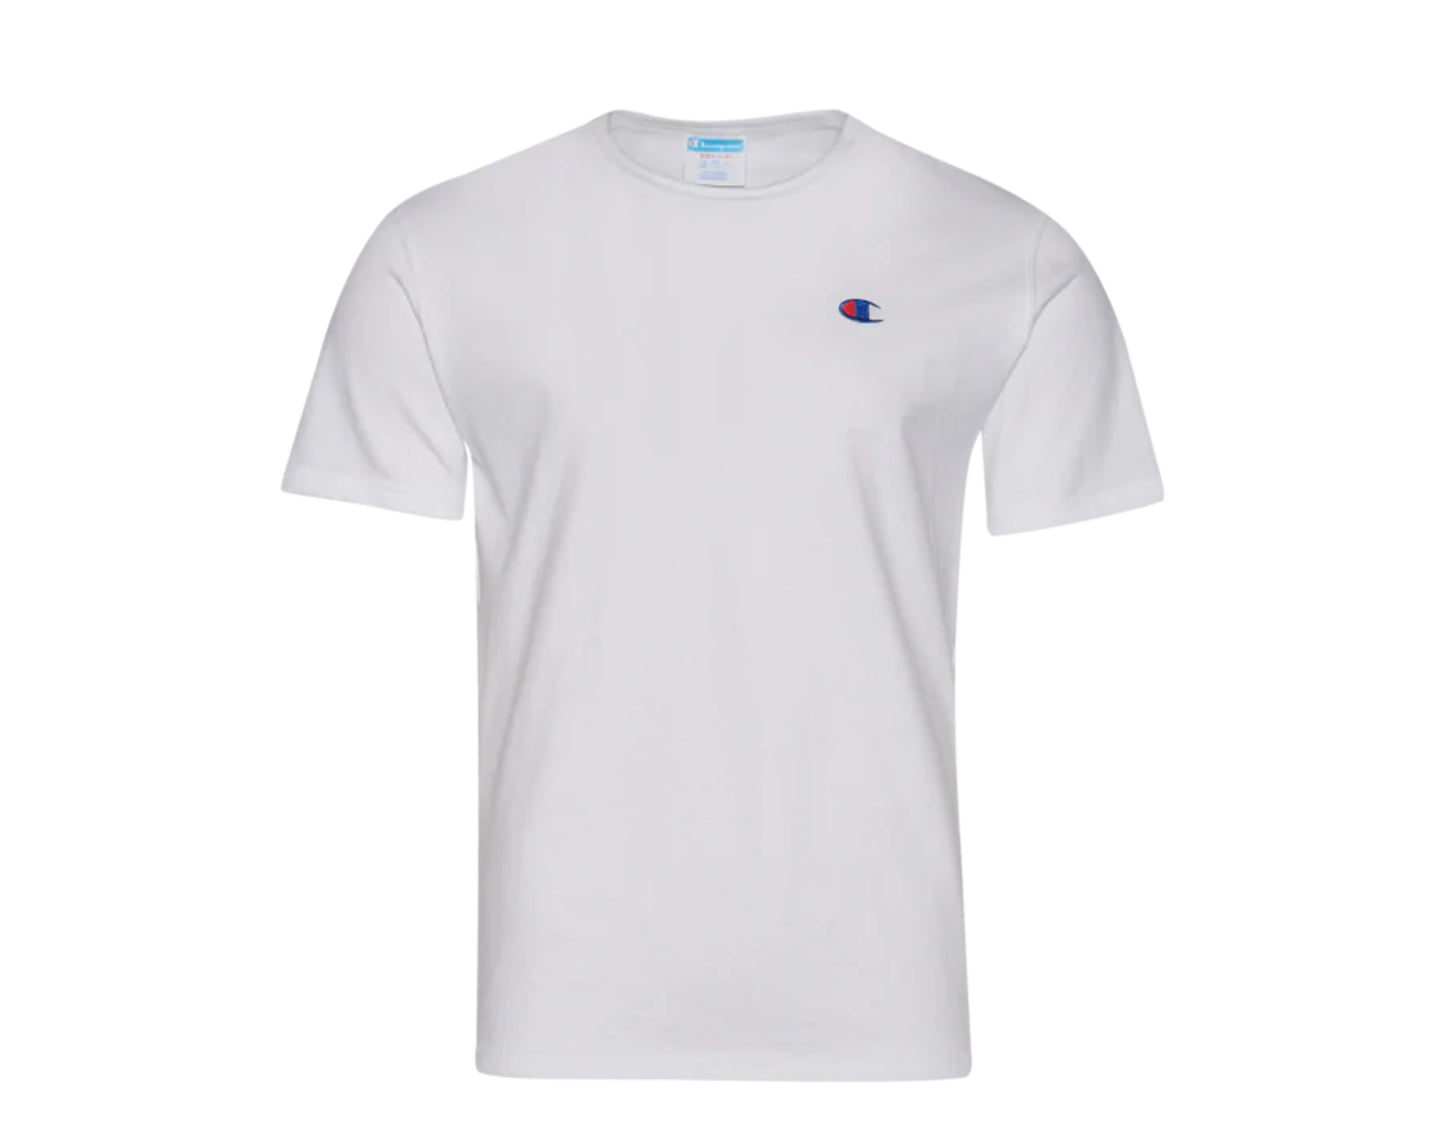 Champion C-Life Heritage C Logo SS White Men's Tee Shirt GT19-Y06145-100